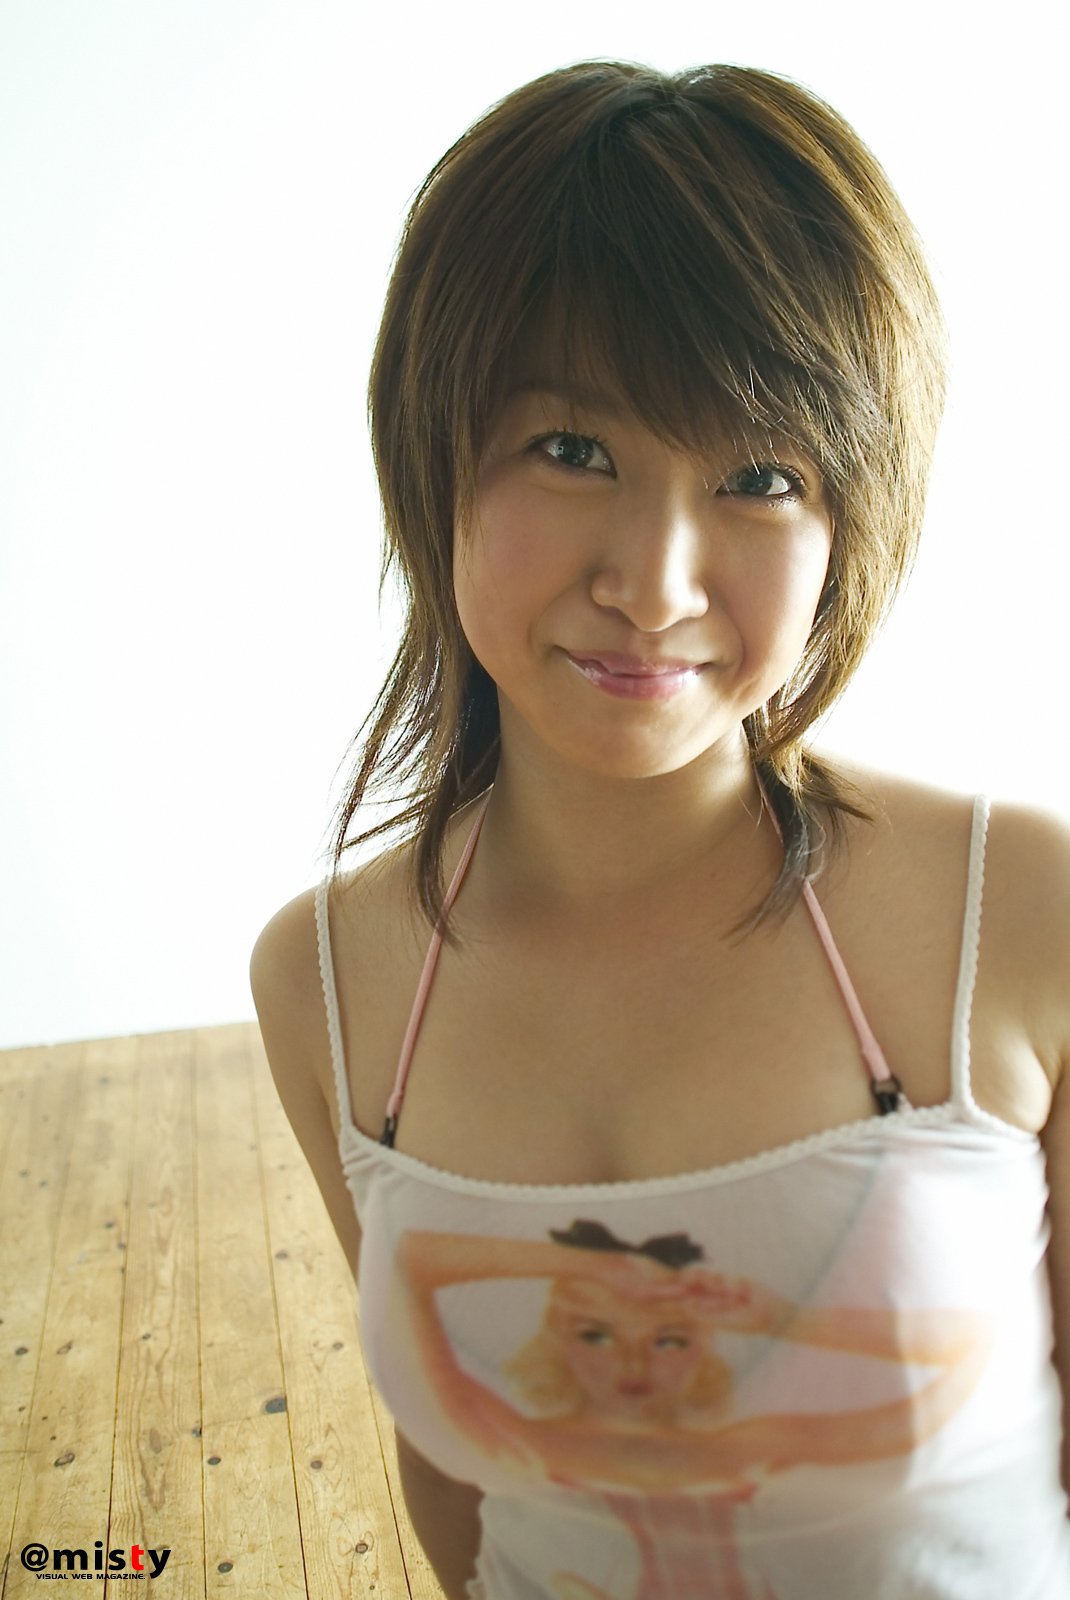 Azuko Otani [@ misty] no.088 - Aiko koyatsu